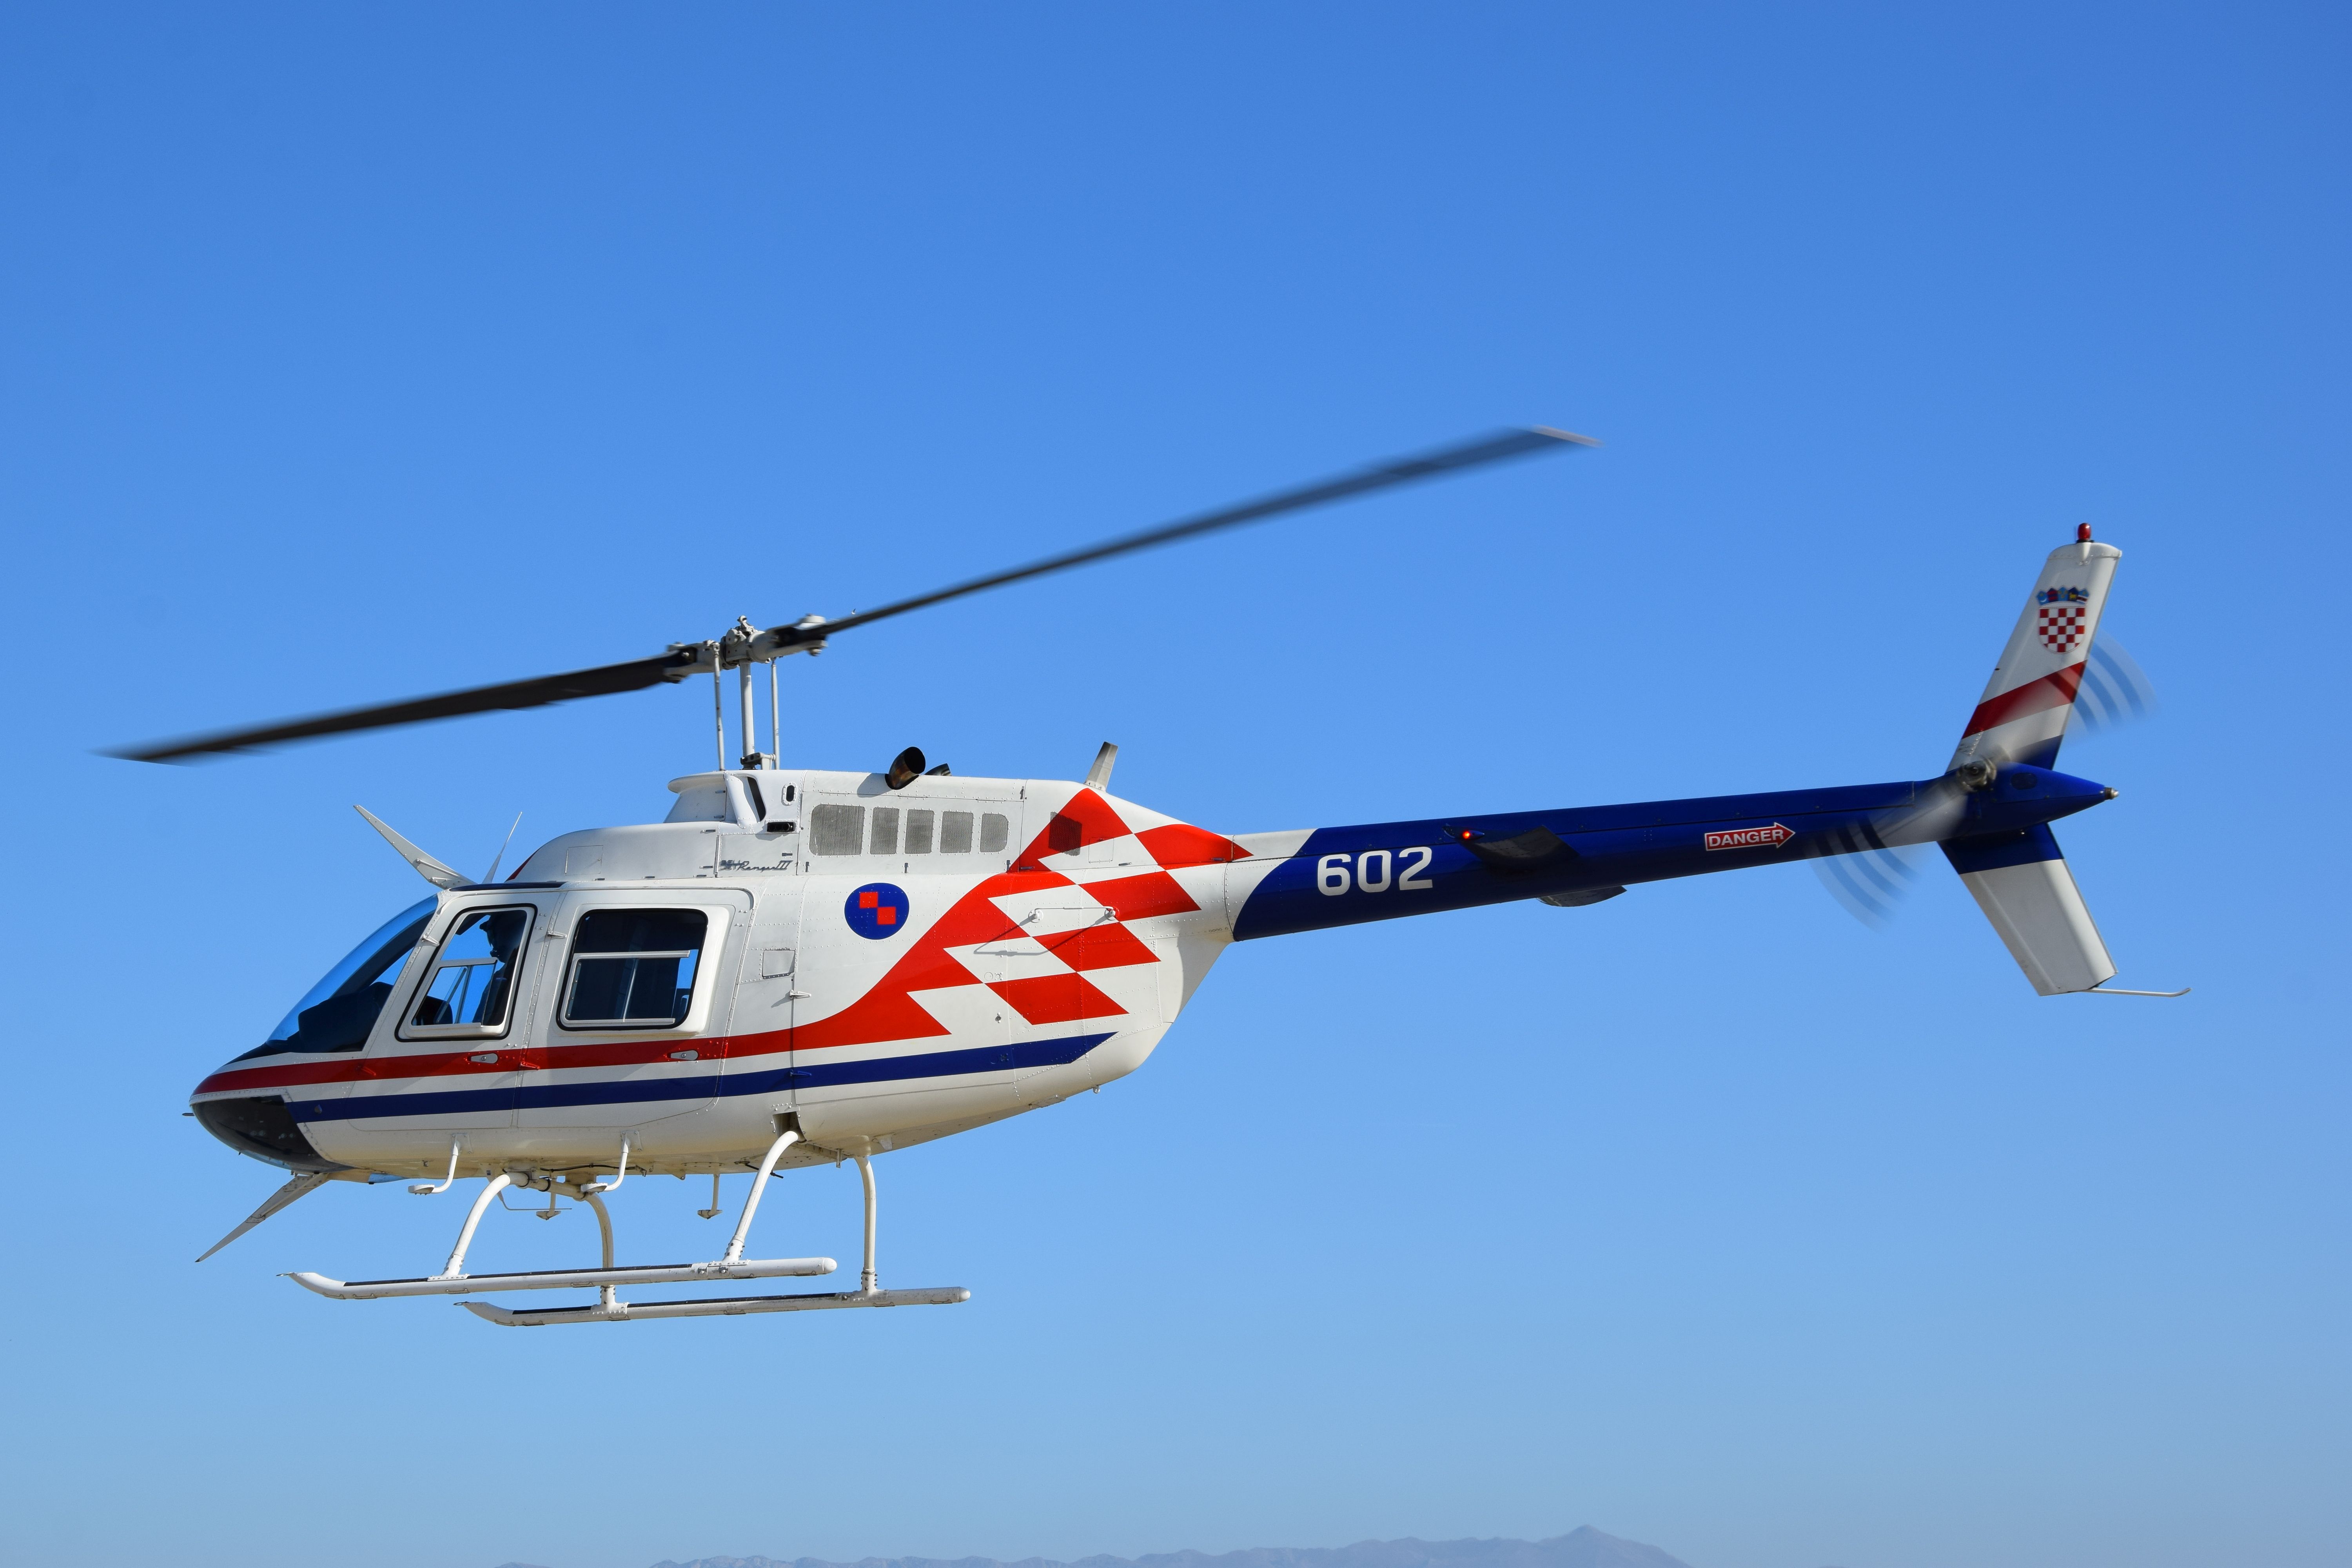 Prvi letovi 28. naraštaja učenika – letača na helikopterima Bell-206B